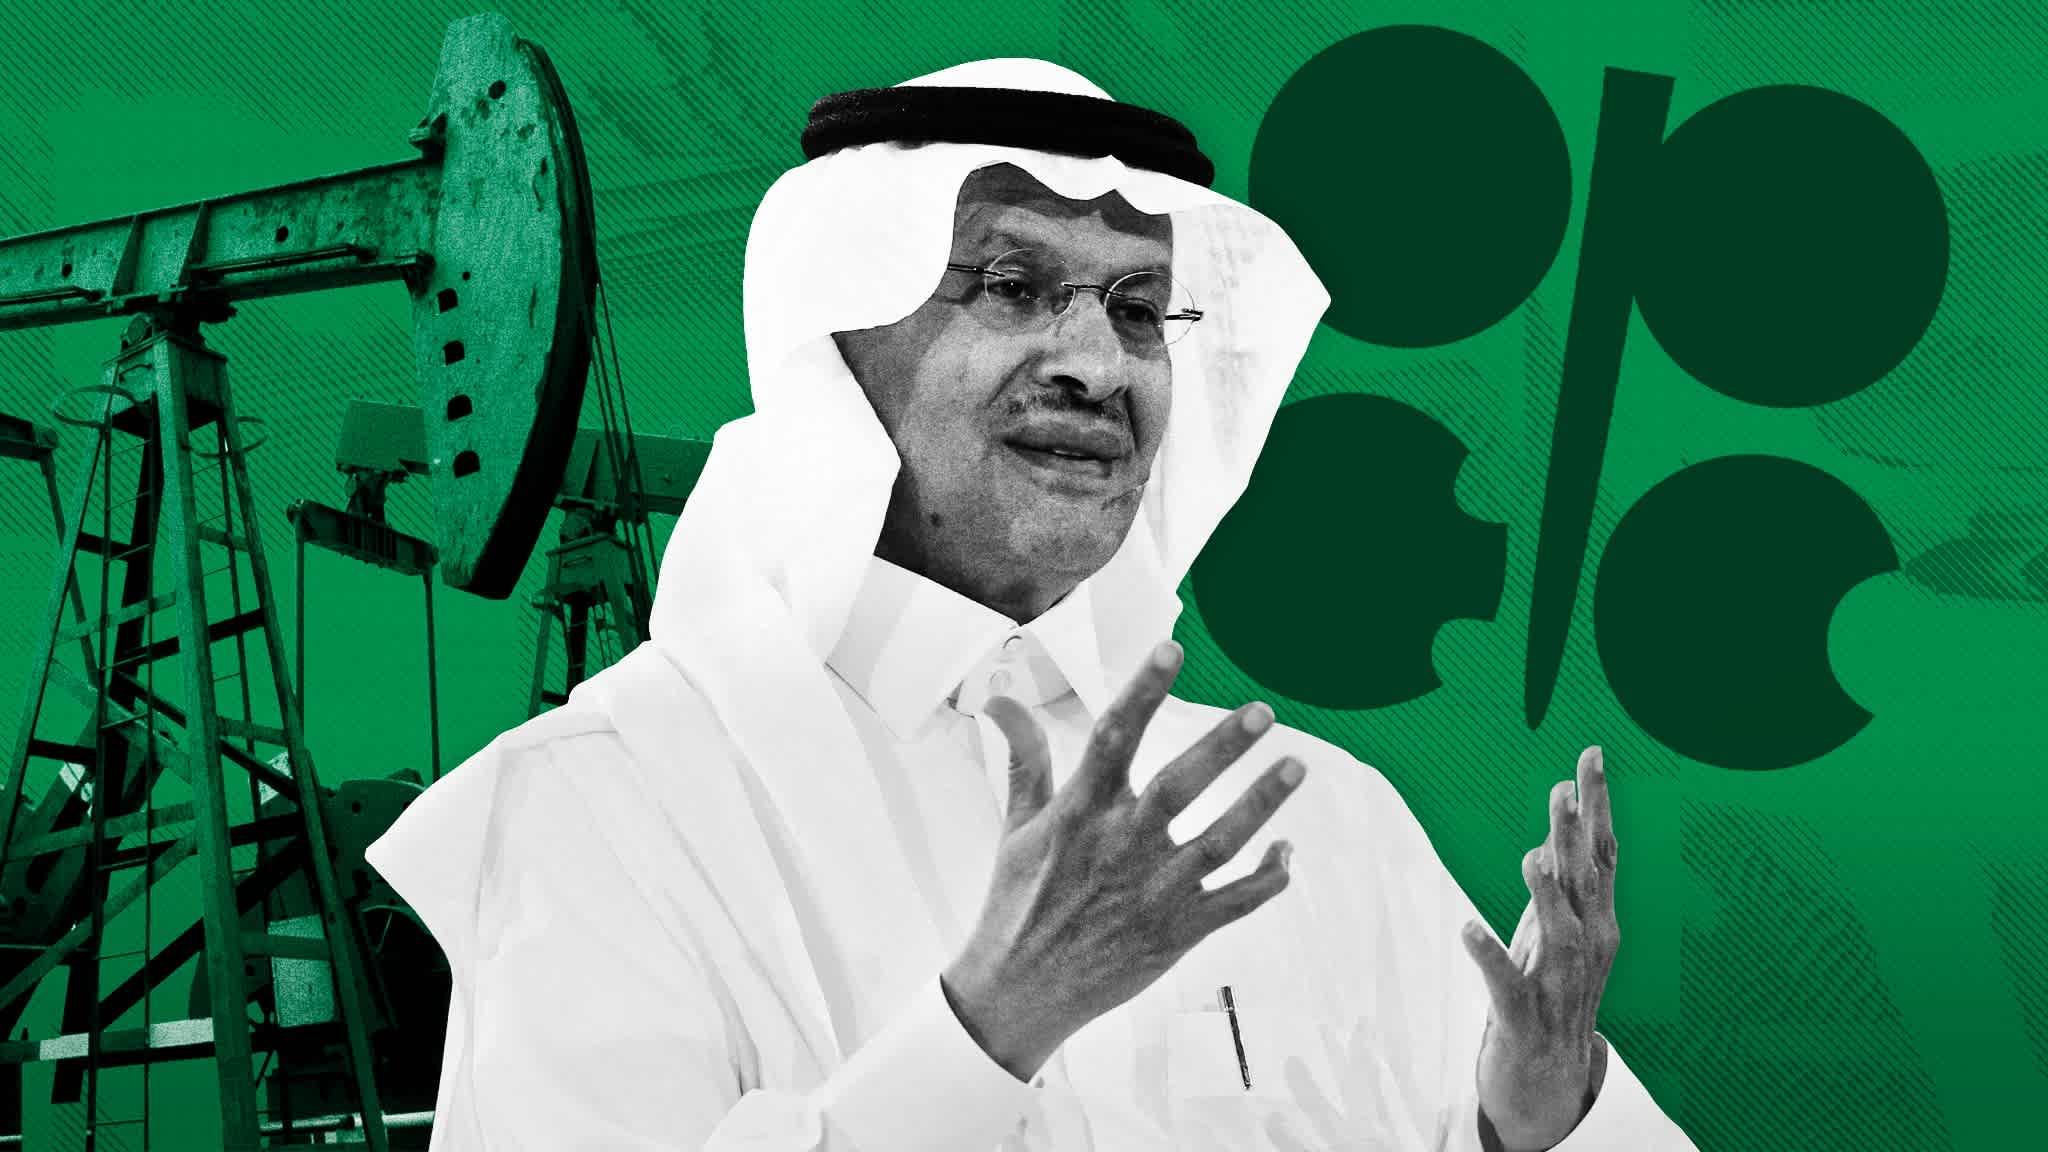 Saudi Arabia’s ‘prickly prince’ of oil bristles as crude price slides